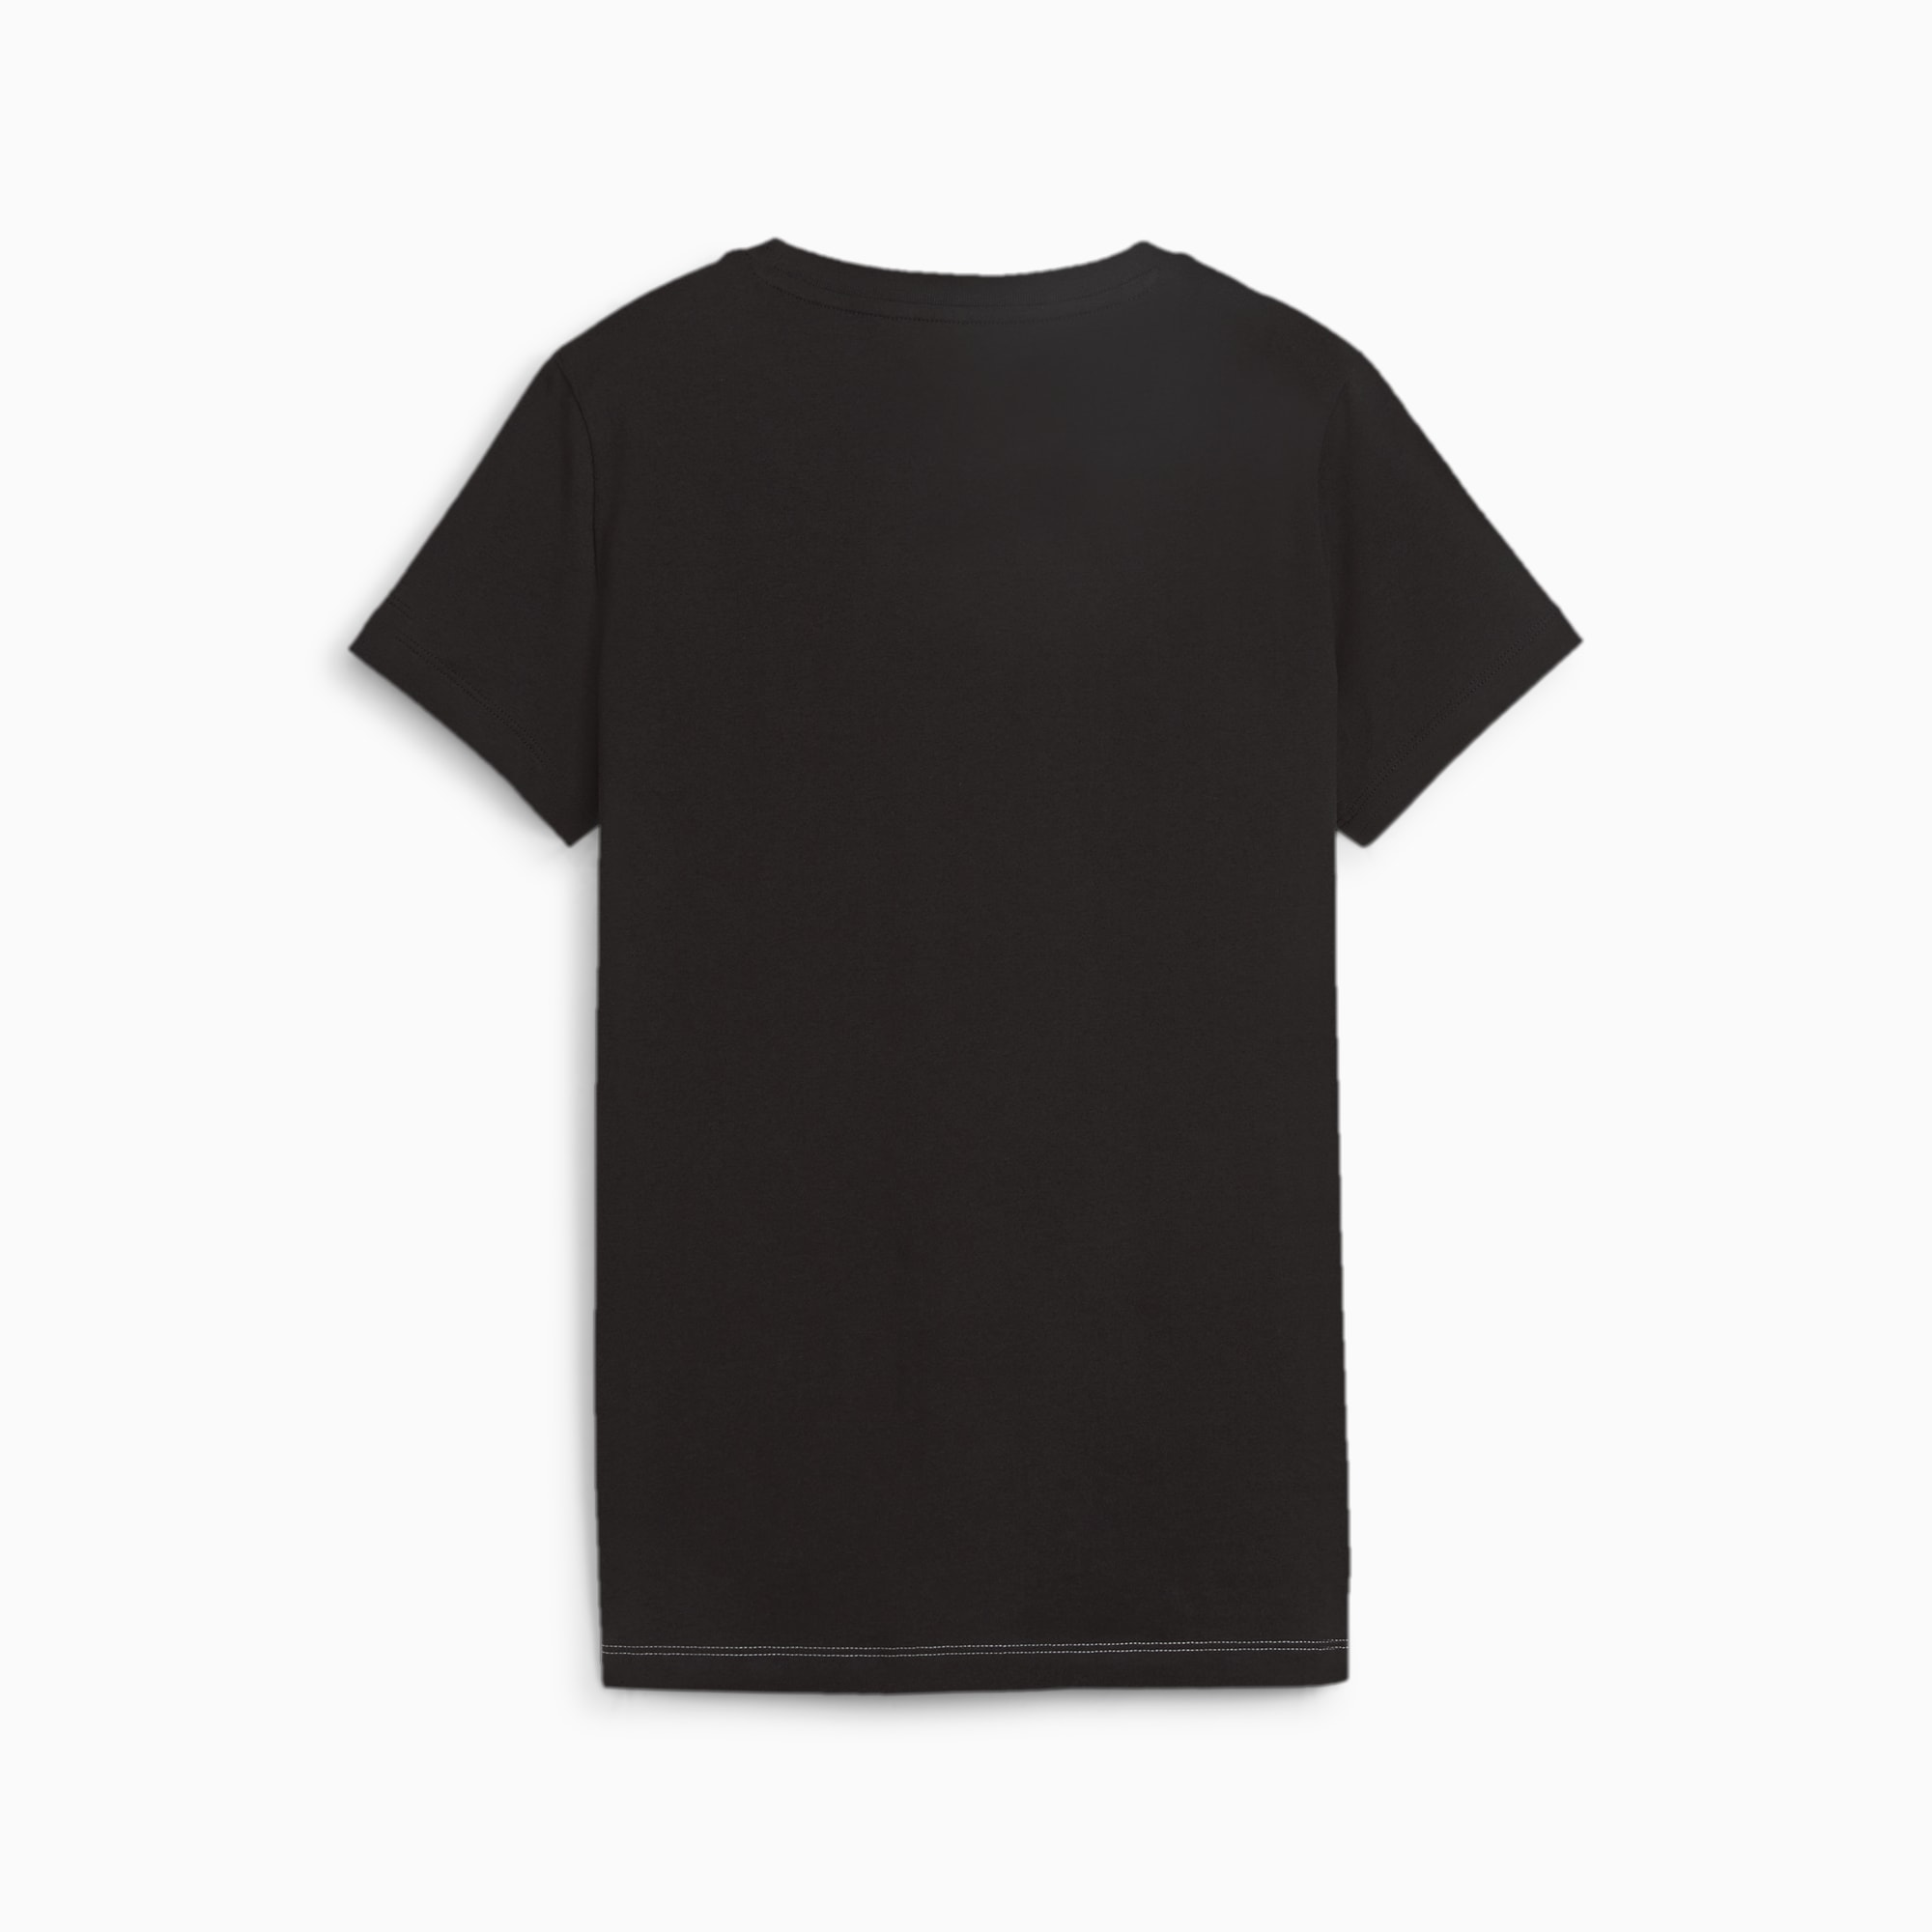 PUMA Power Women's T-Shirt, Black, Size S, Clothing